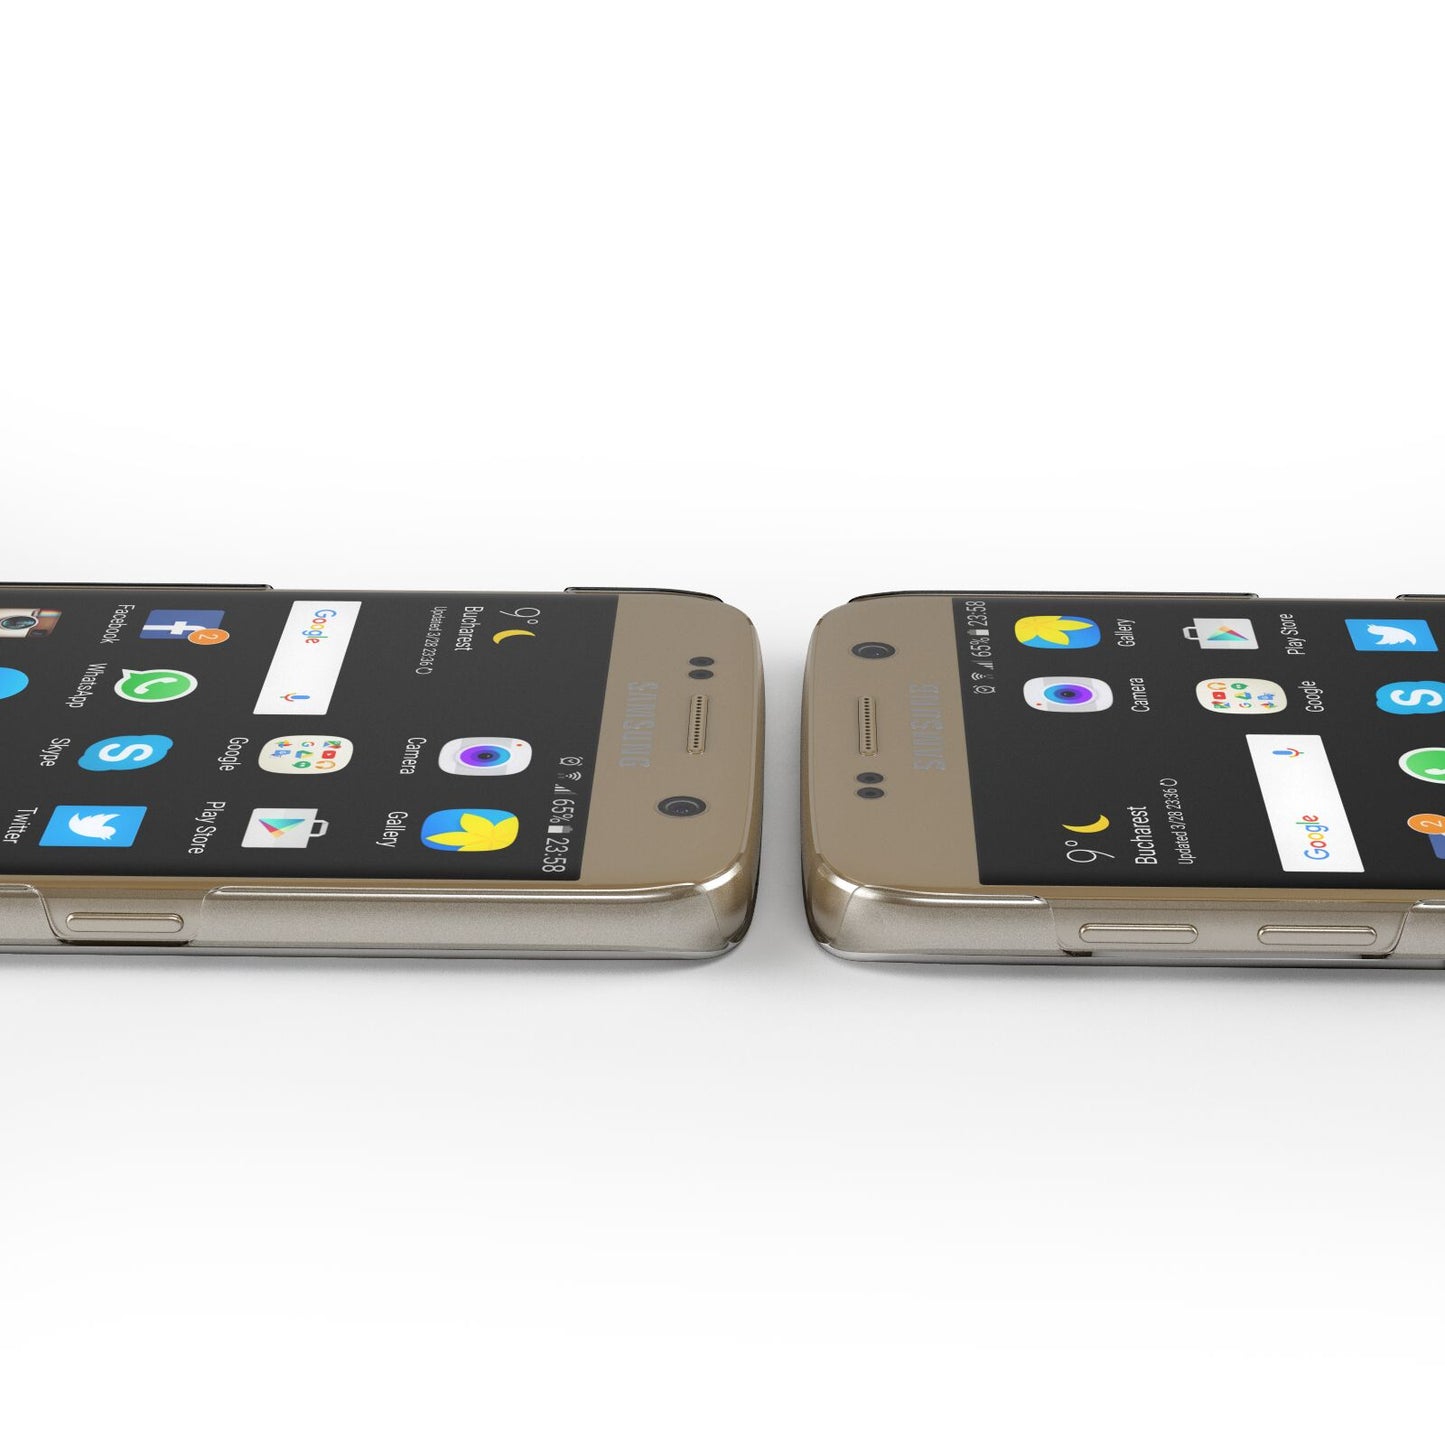 Lhasa Apso Personalised Samsung Galaxy Case Ports Cutout